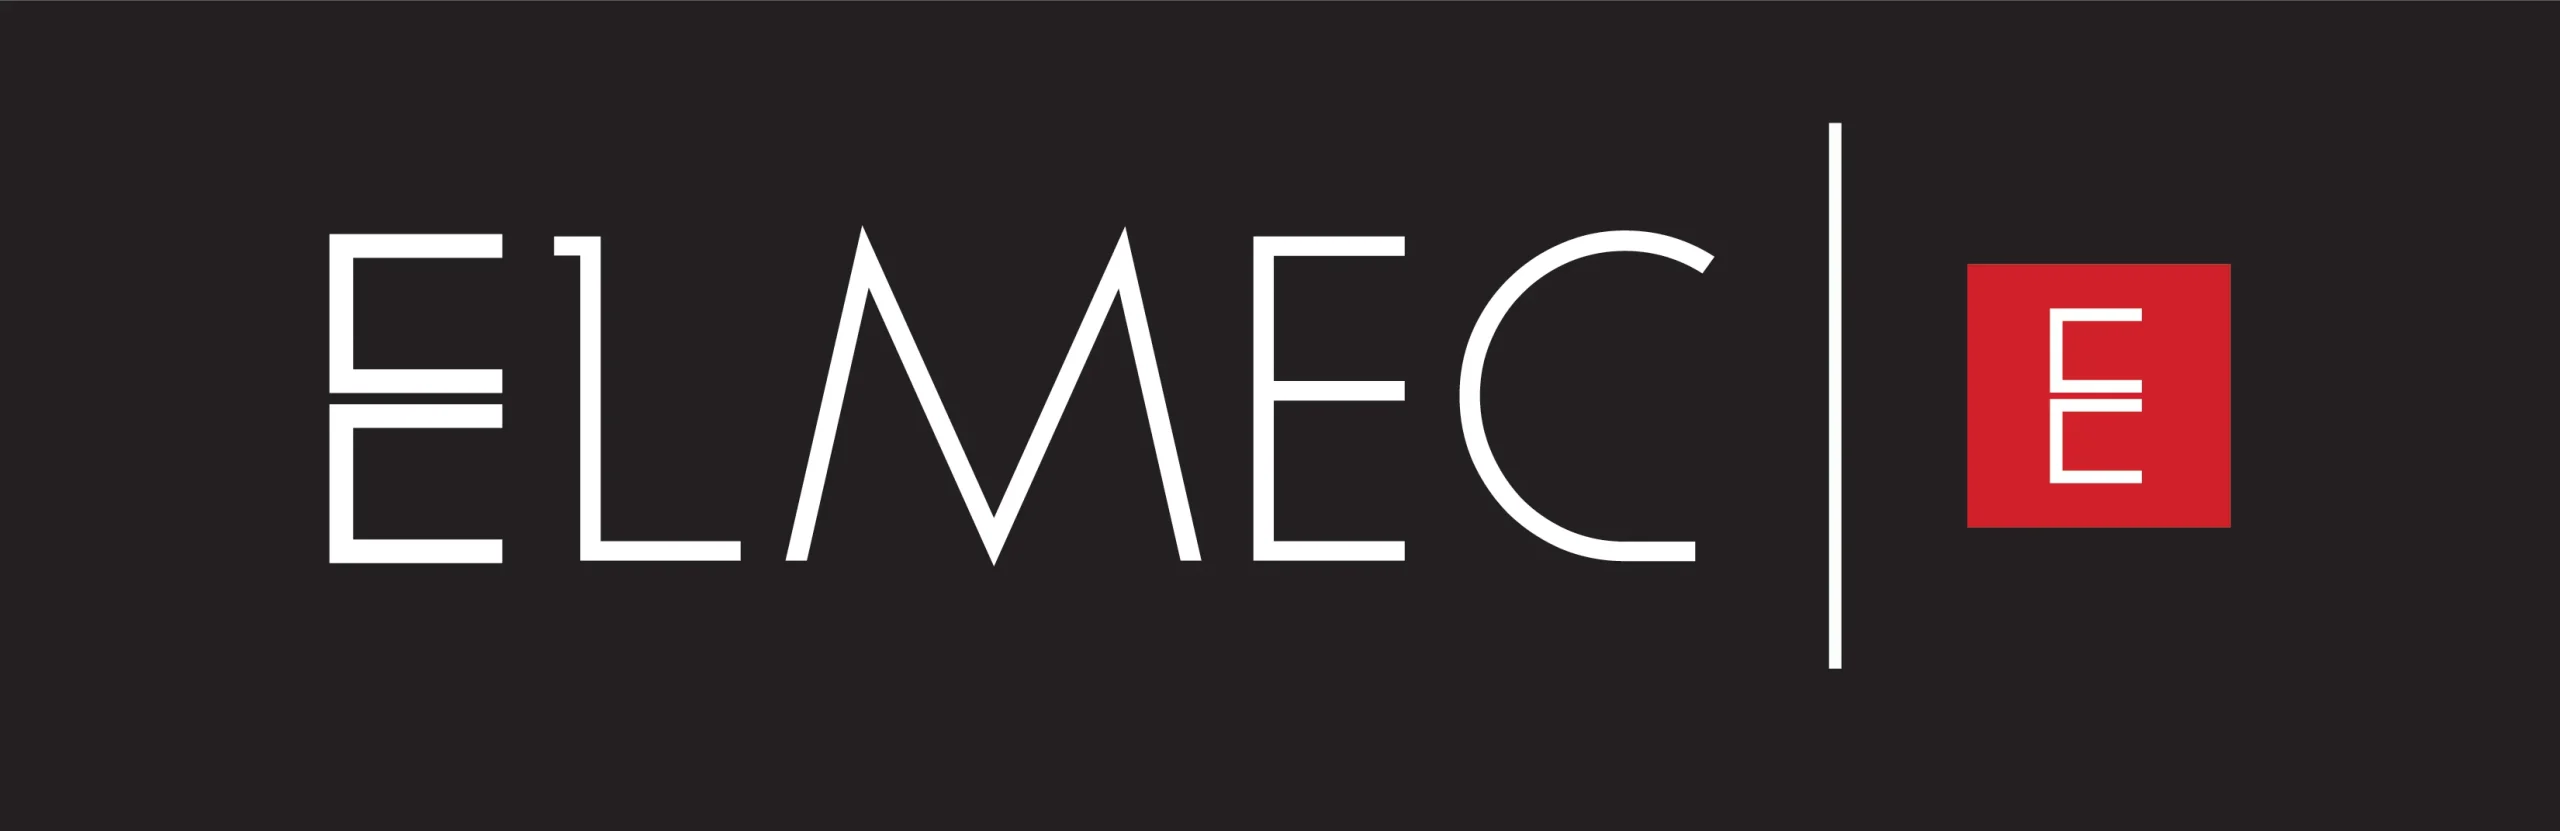 logo_elmec_negro